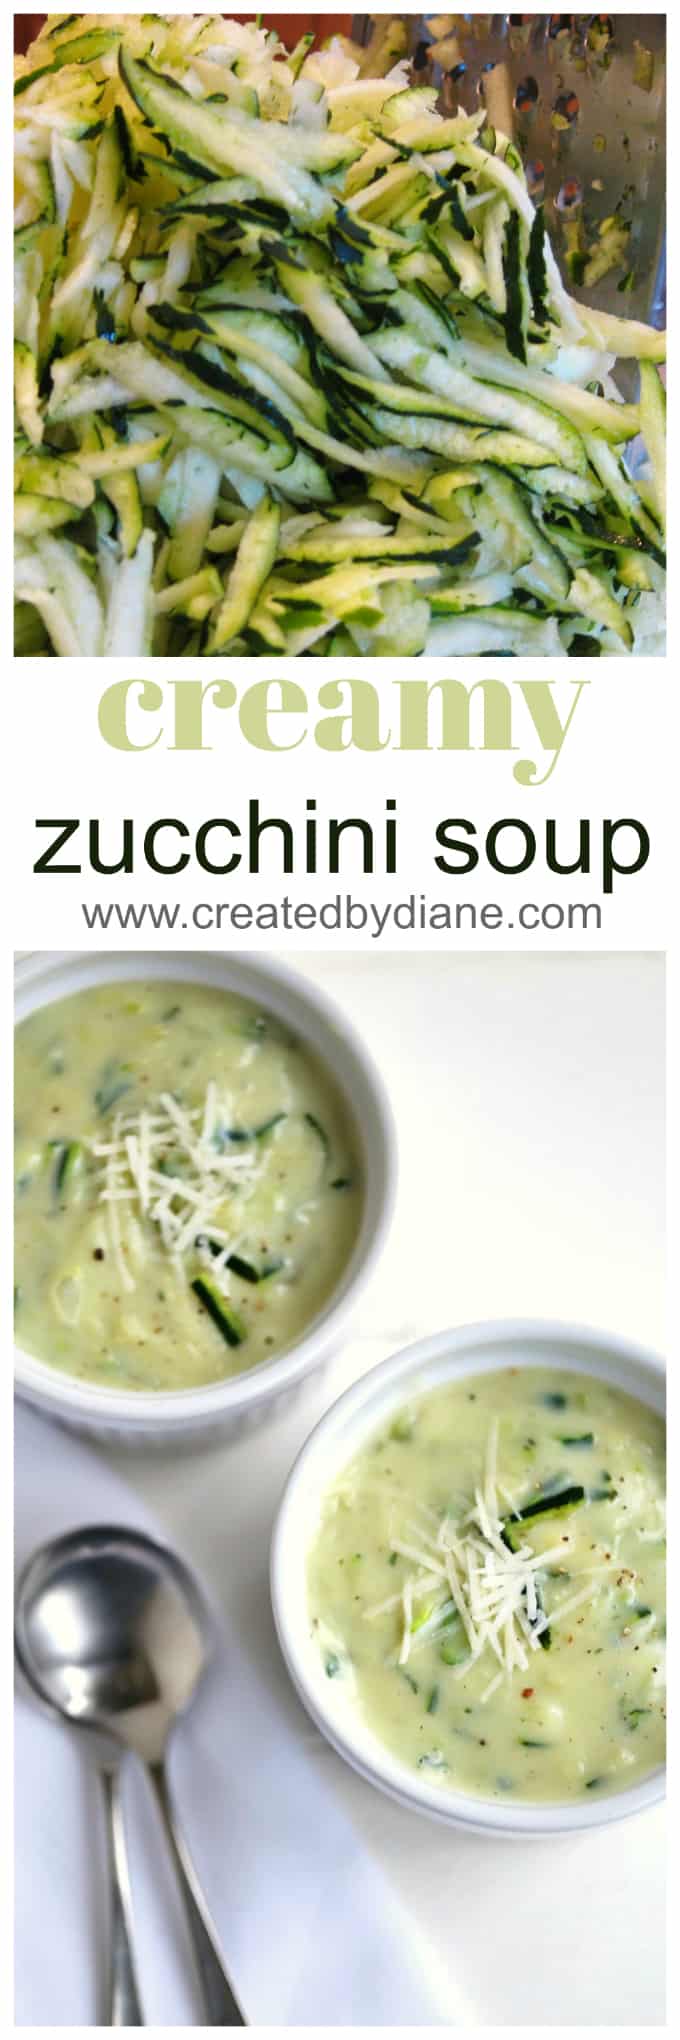 white bowls of zucchini soup